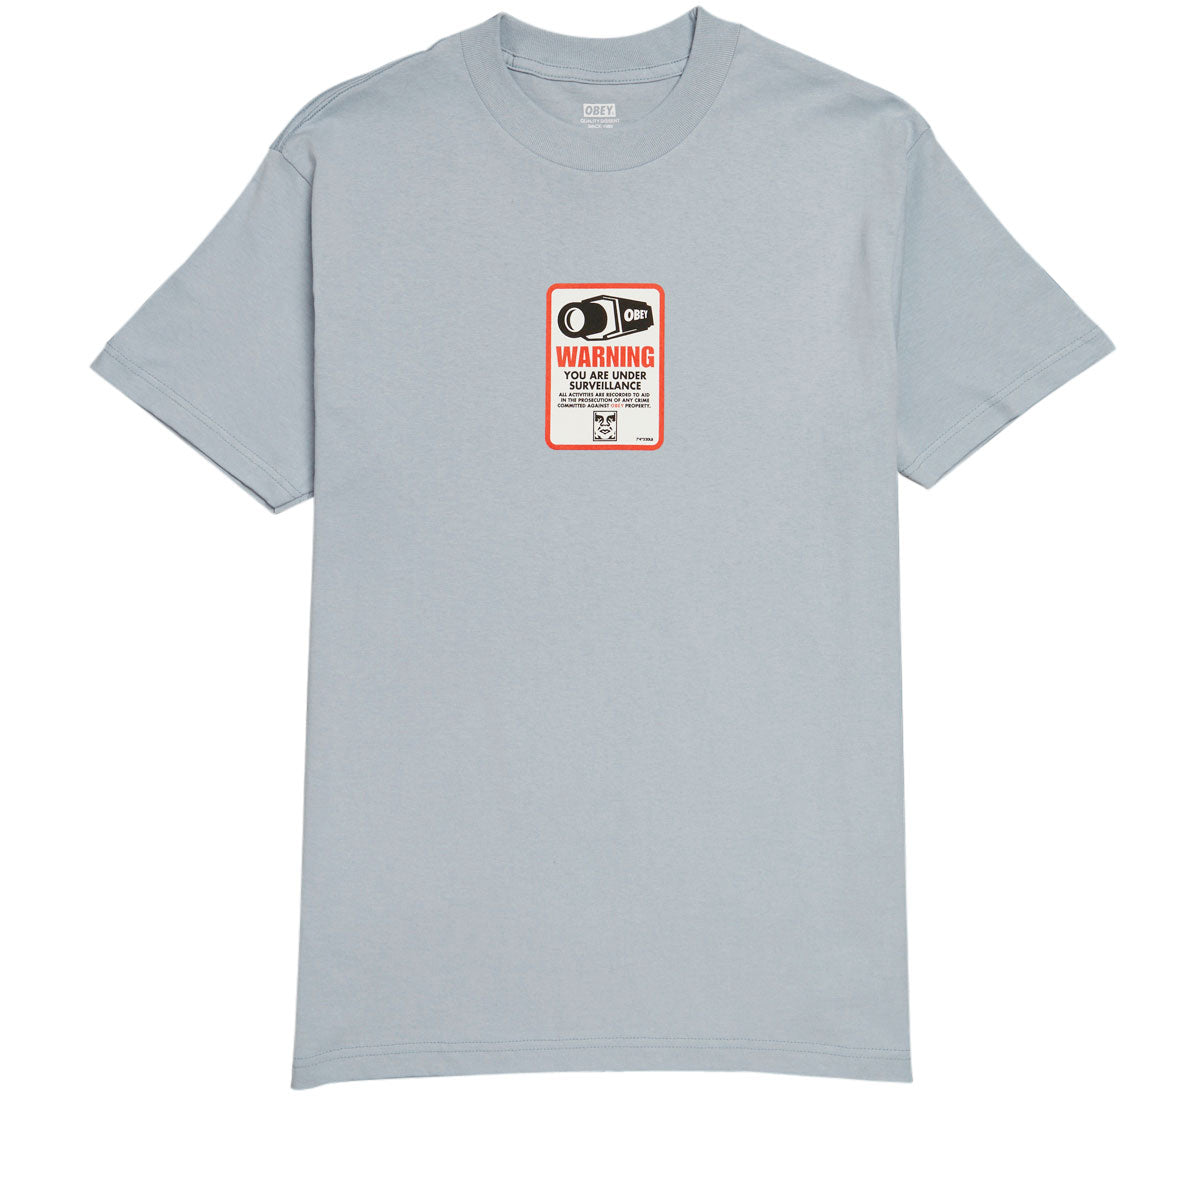 Obey Surveillance T-Shirt - Good Grey image 1